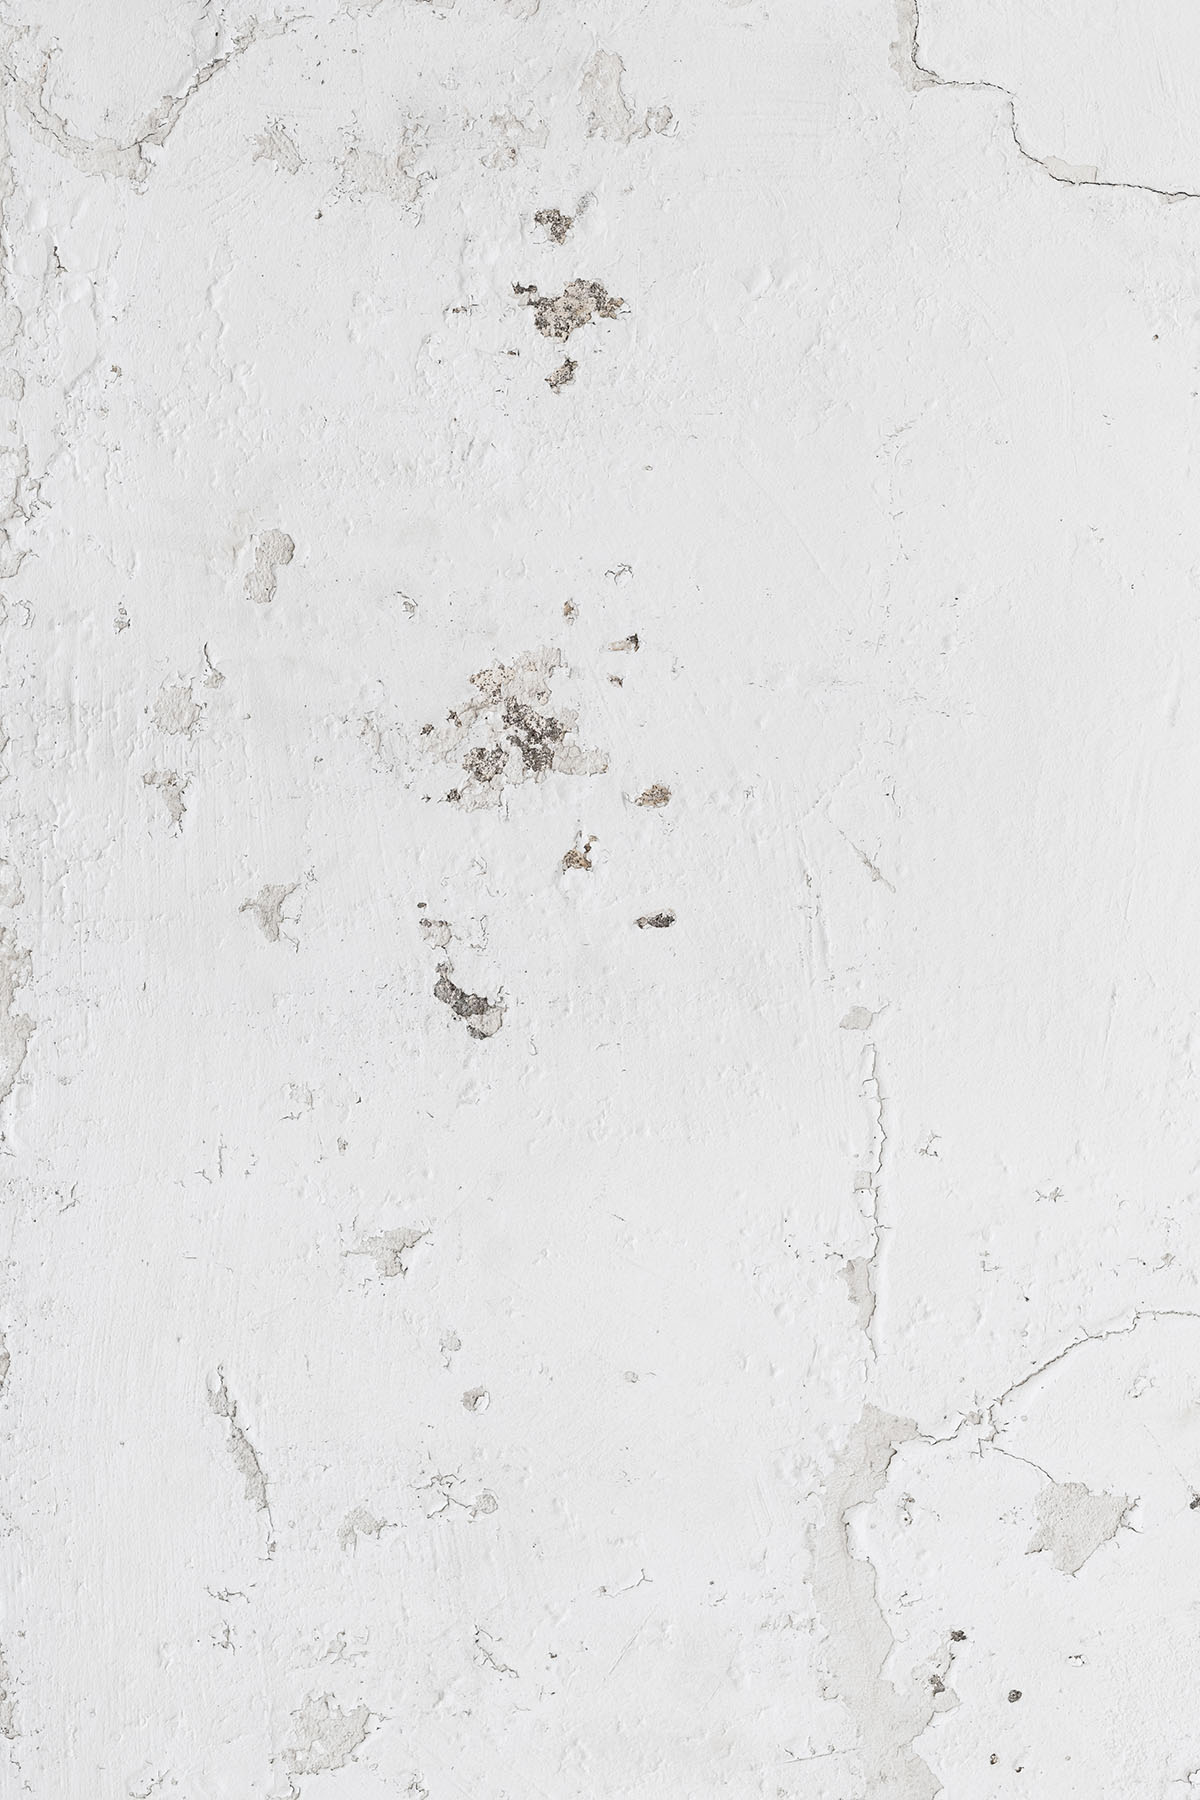 Witte fotoachtergrond cement muur geprint op mooie kwaliteit vinyl